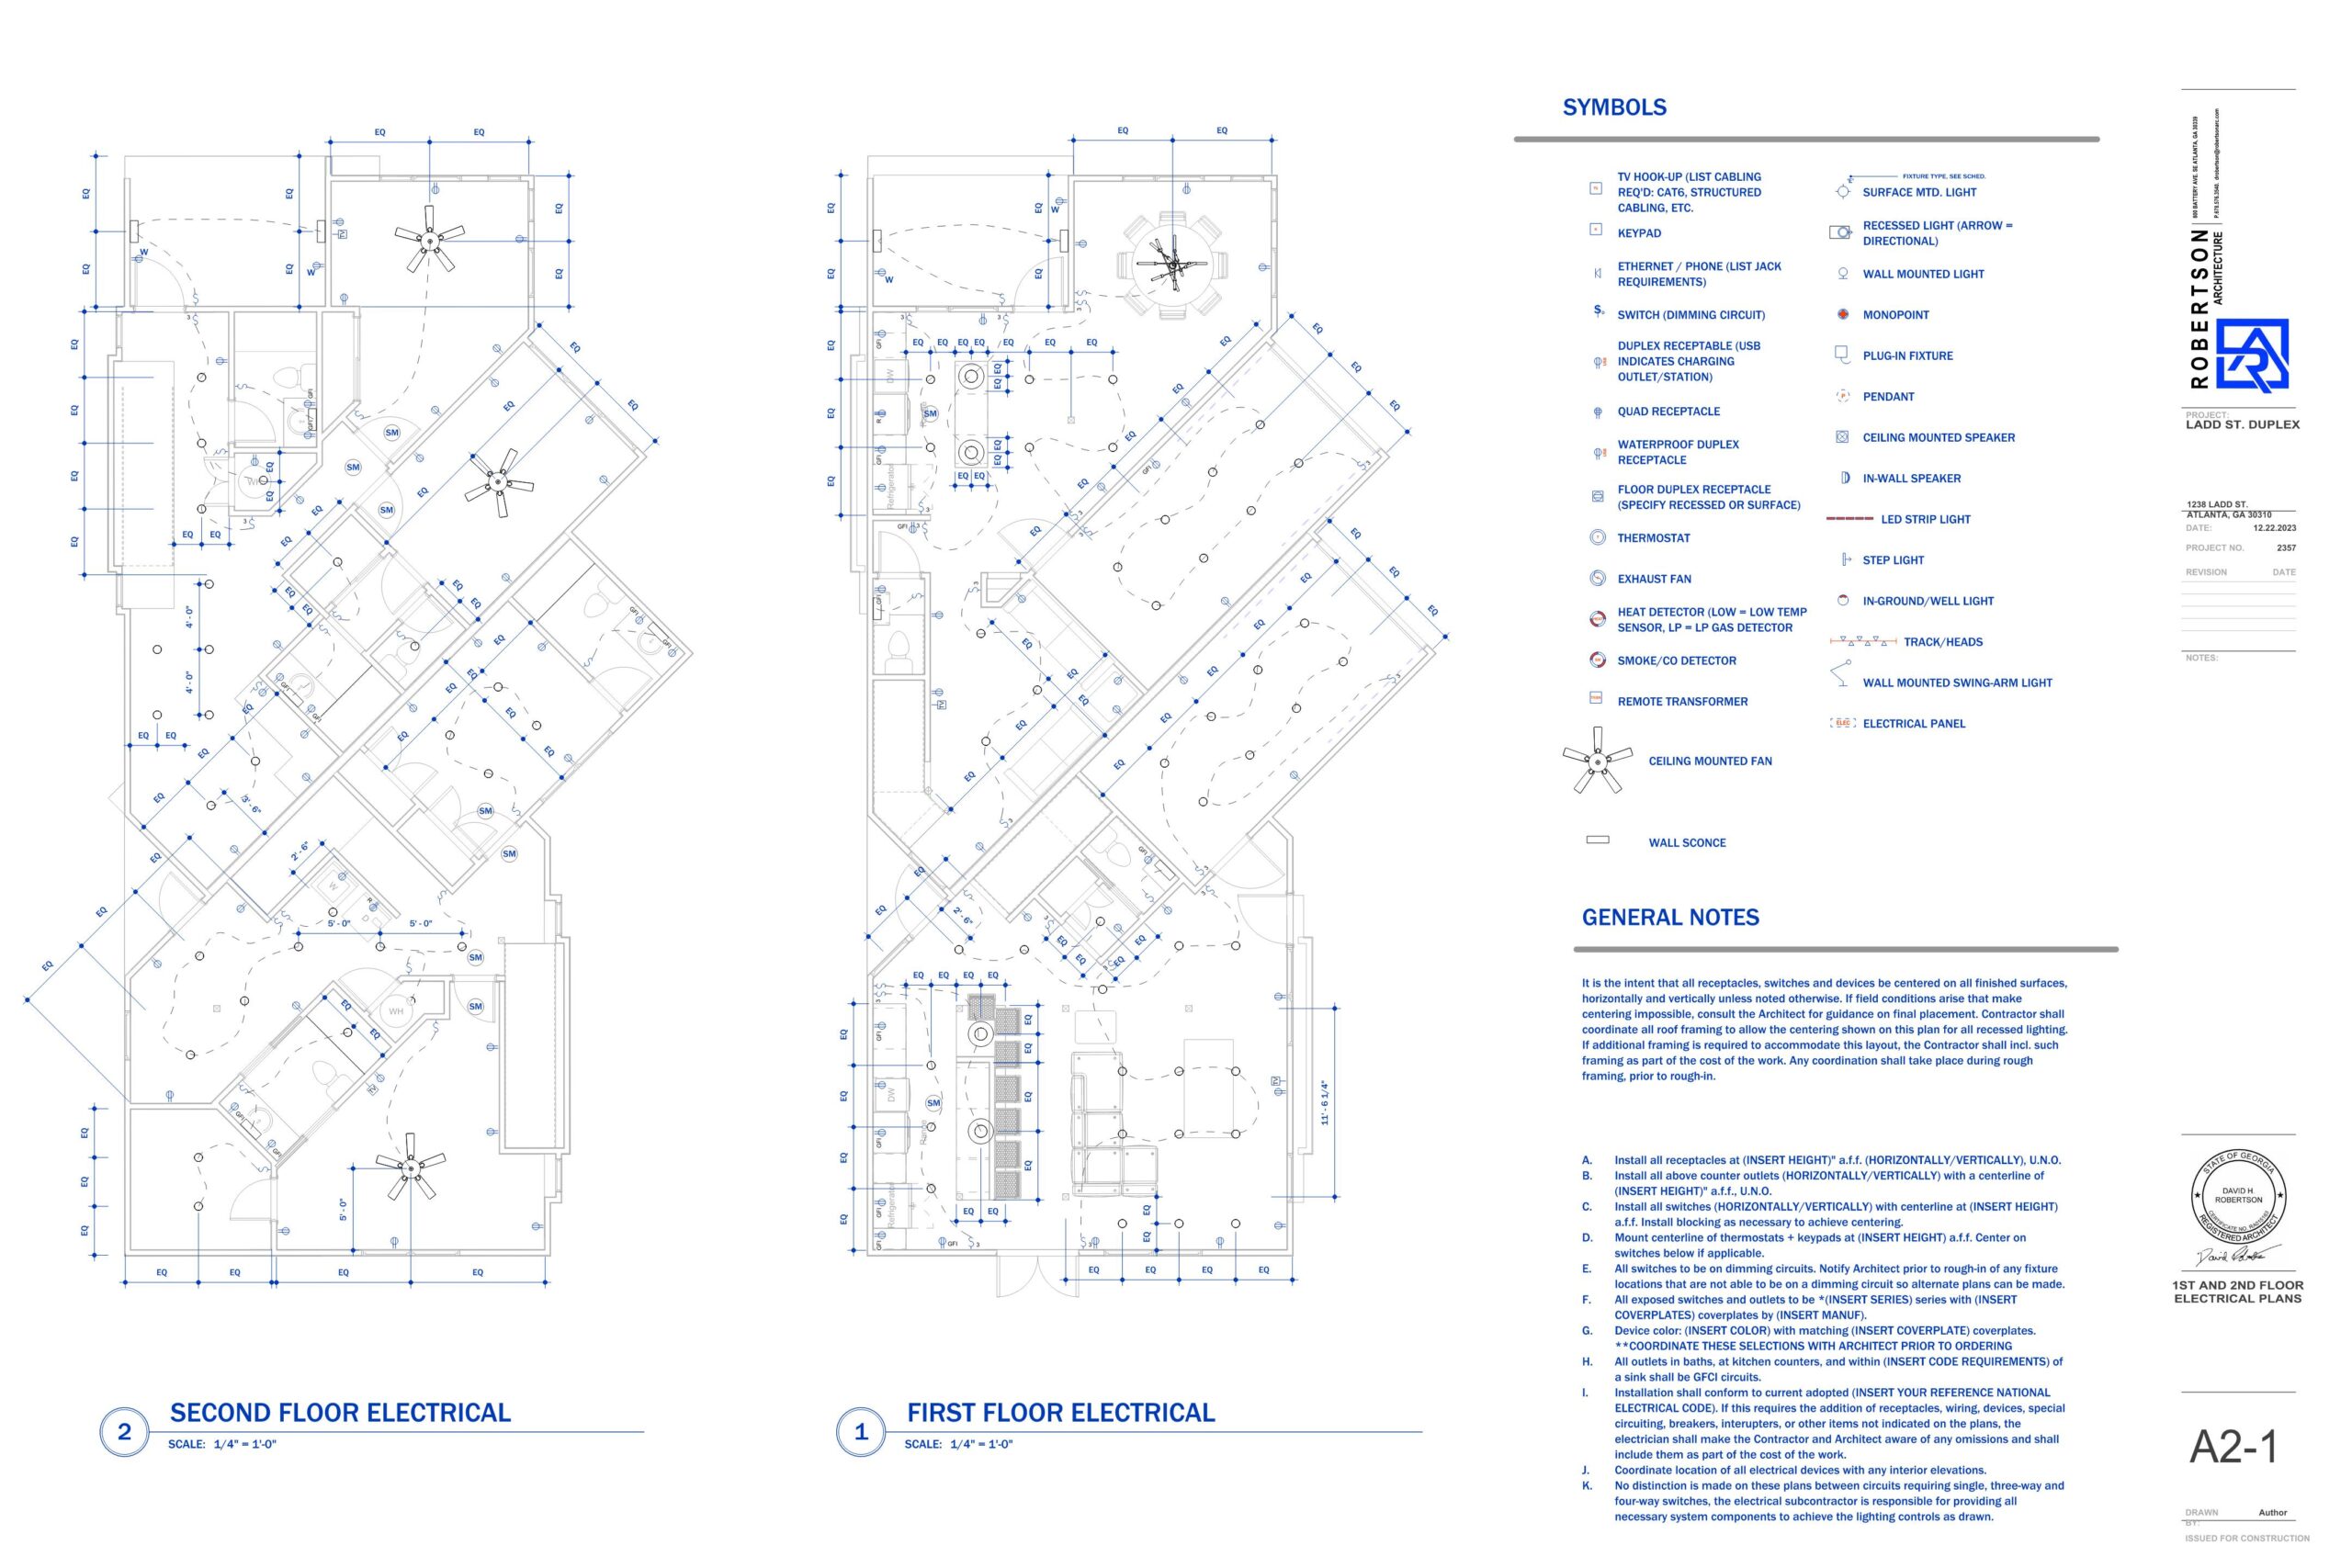 Electrical Plans – Ladd St Duplex